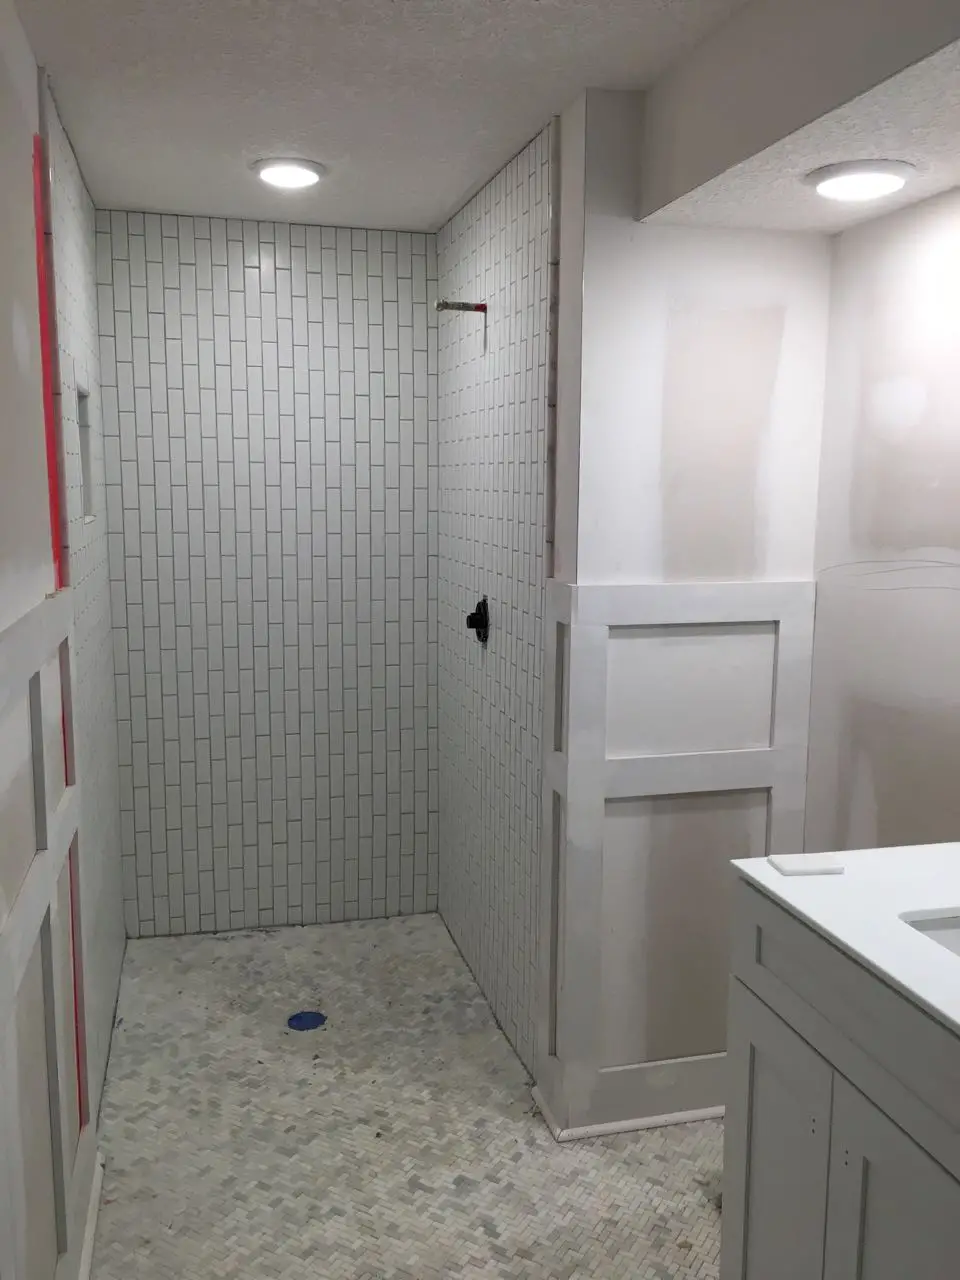 Marble herringbone tile bathroom floor with vertical subway shower surround - That Homebird Life Blog